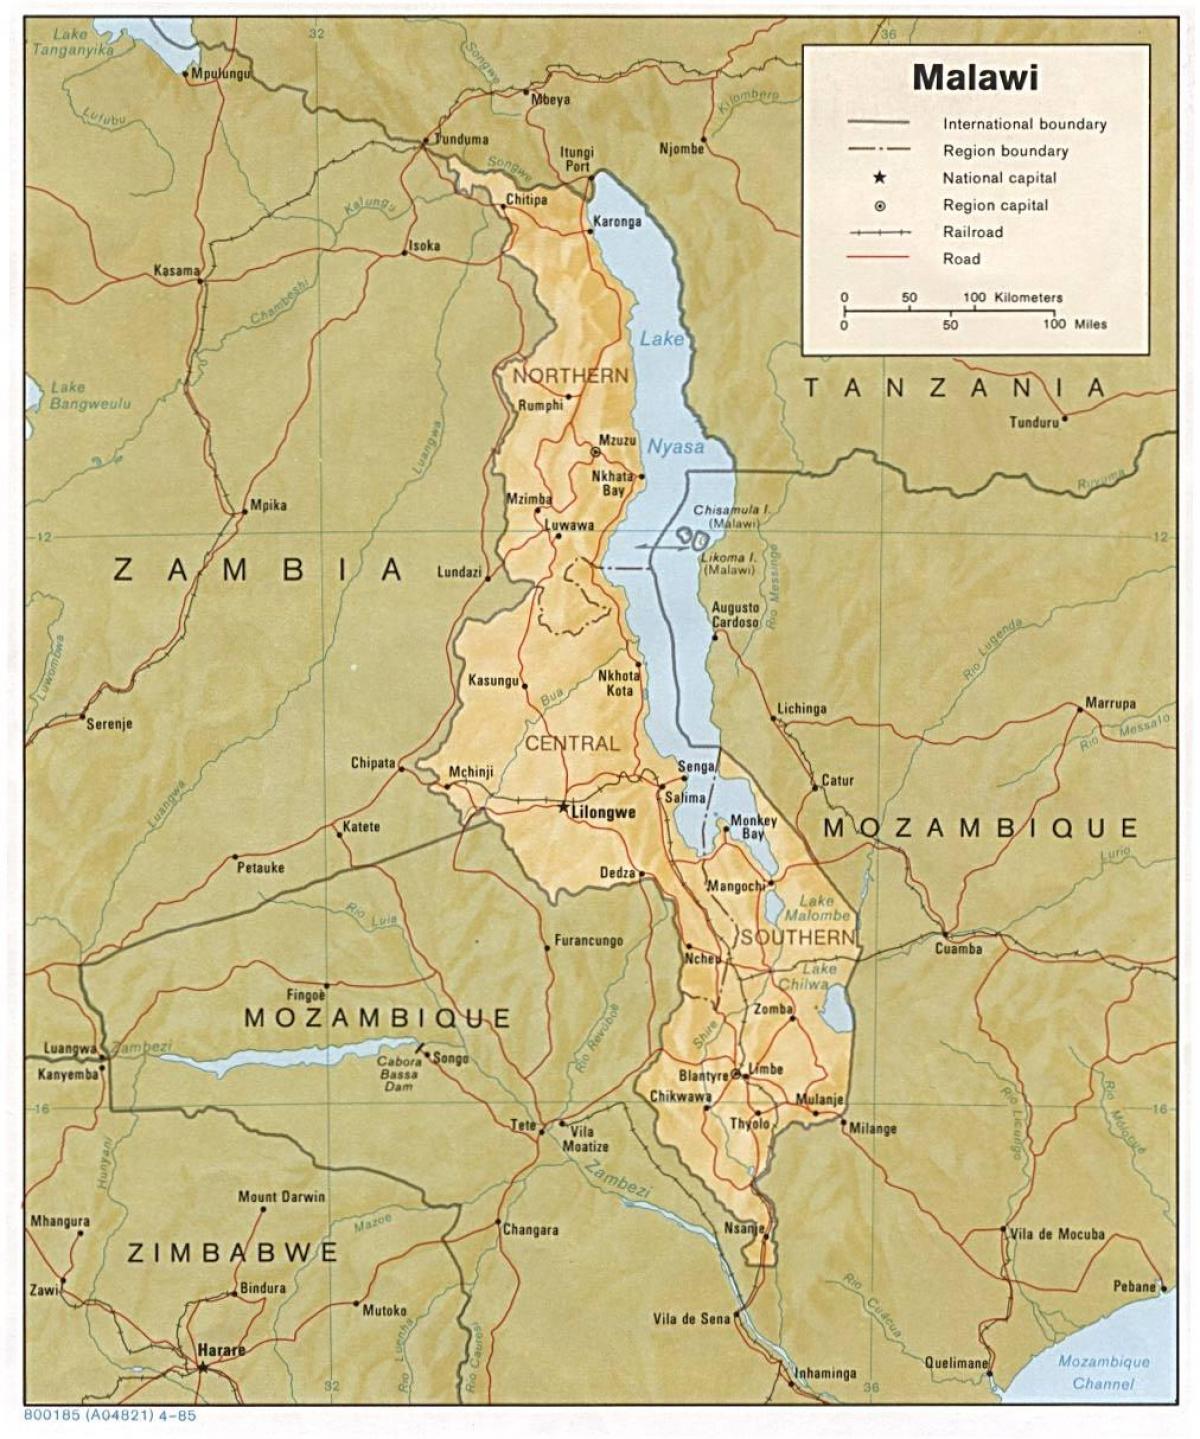 jezera Malawi na zemljevidu